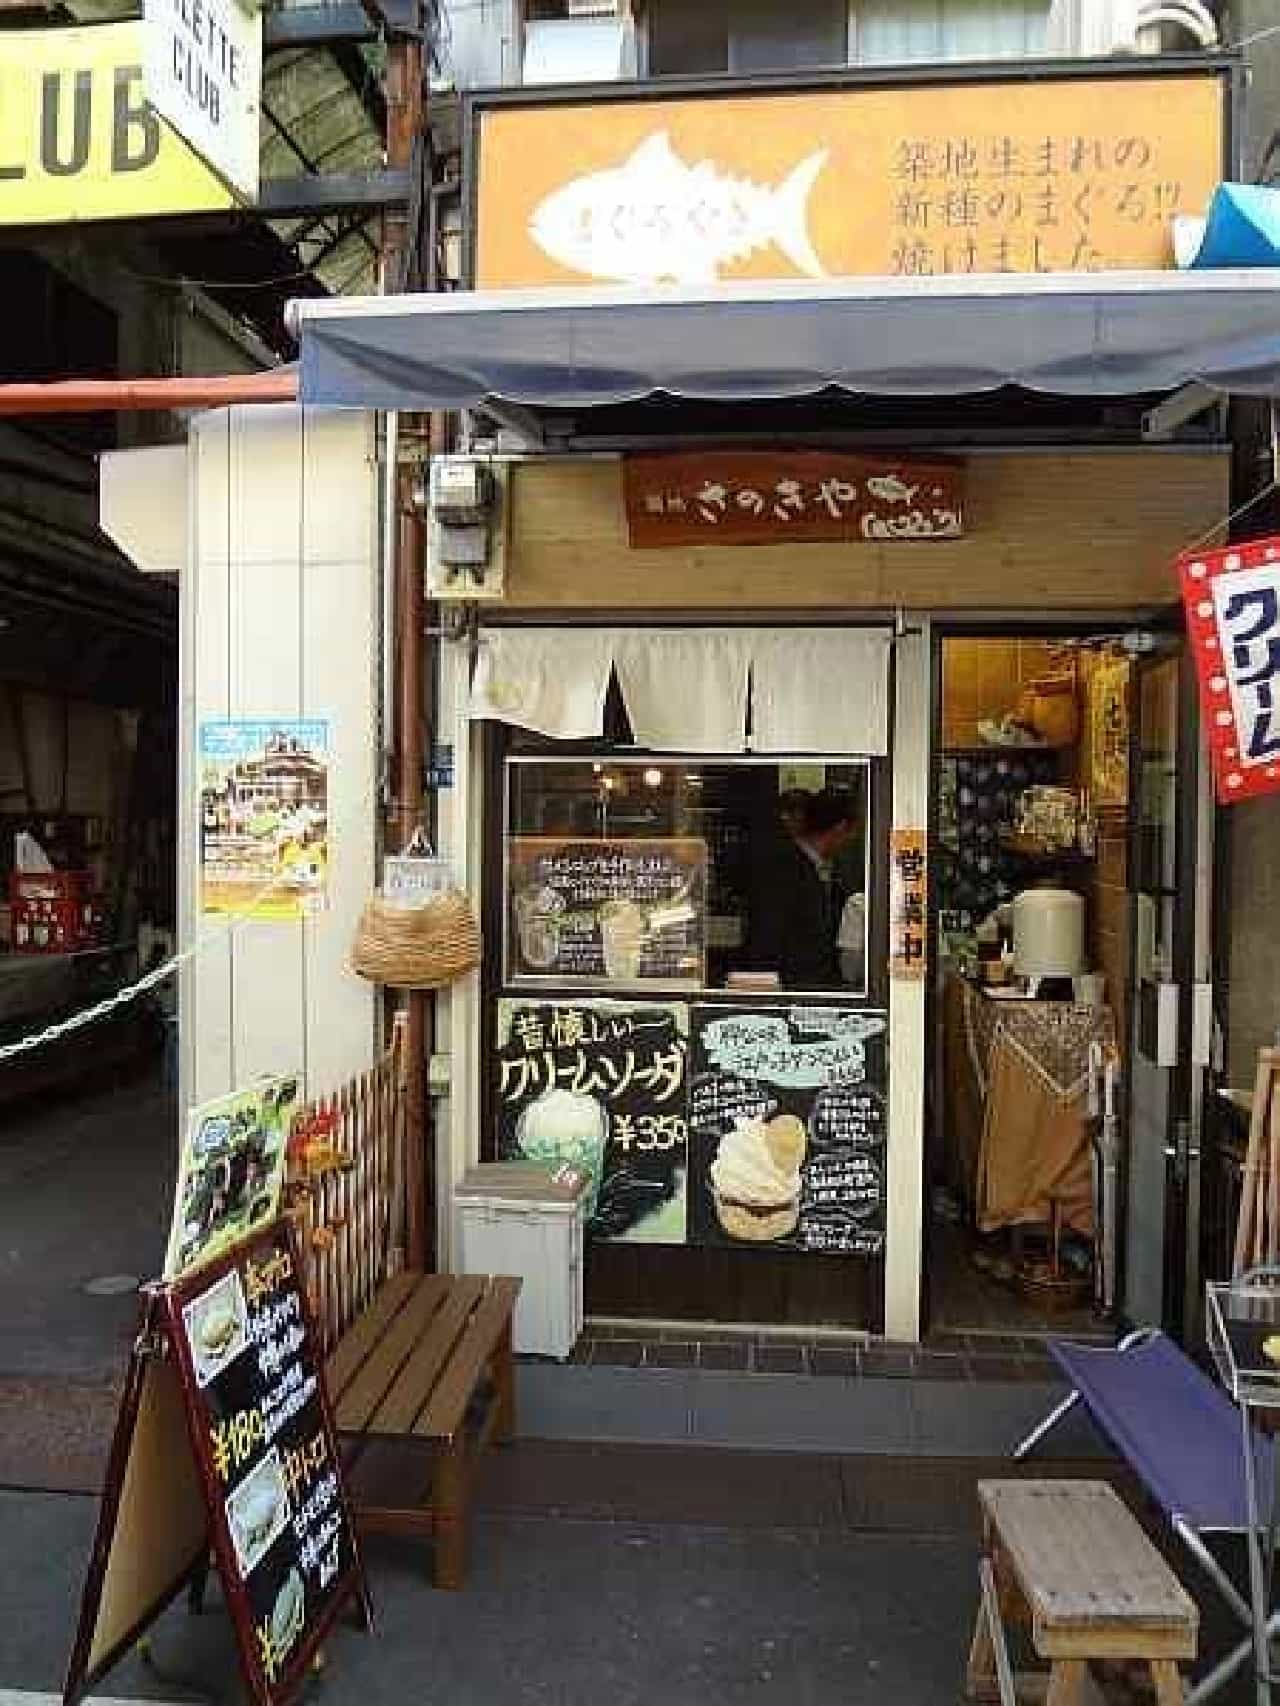 "Sanokiya" store also sells old-fashioned "cream soda"